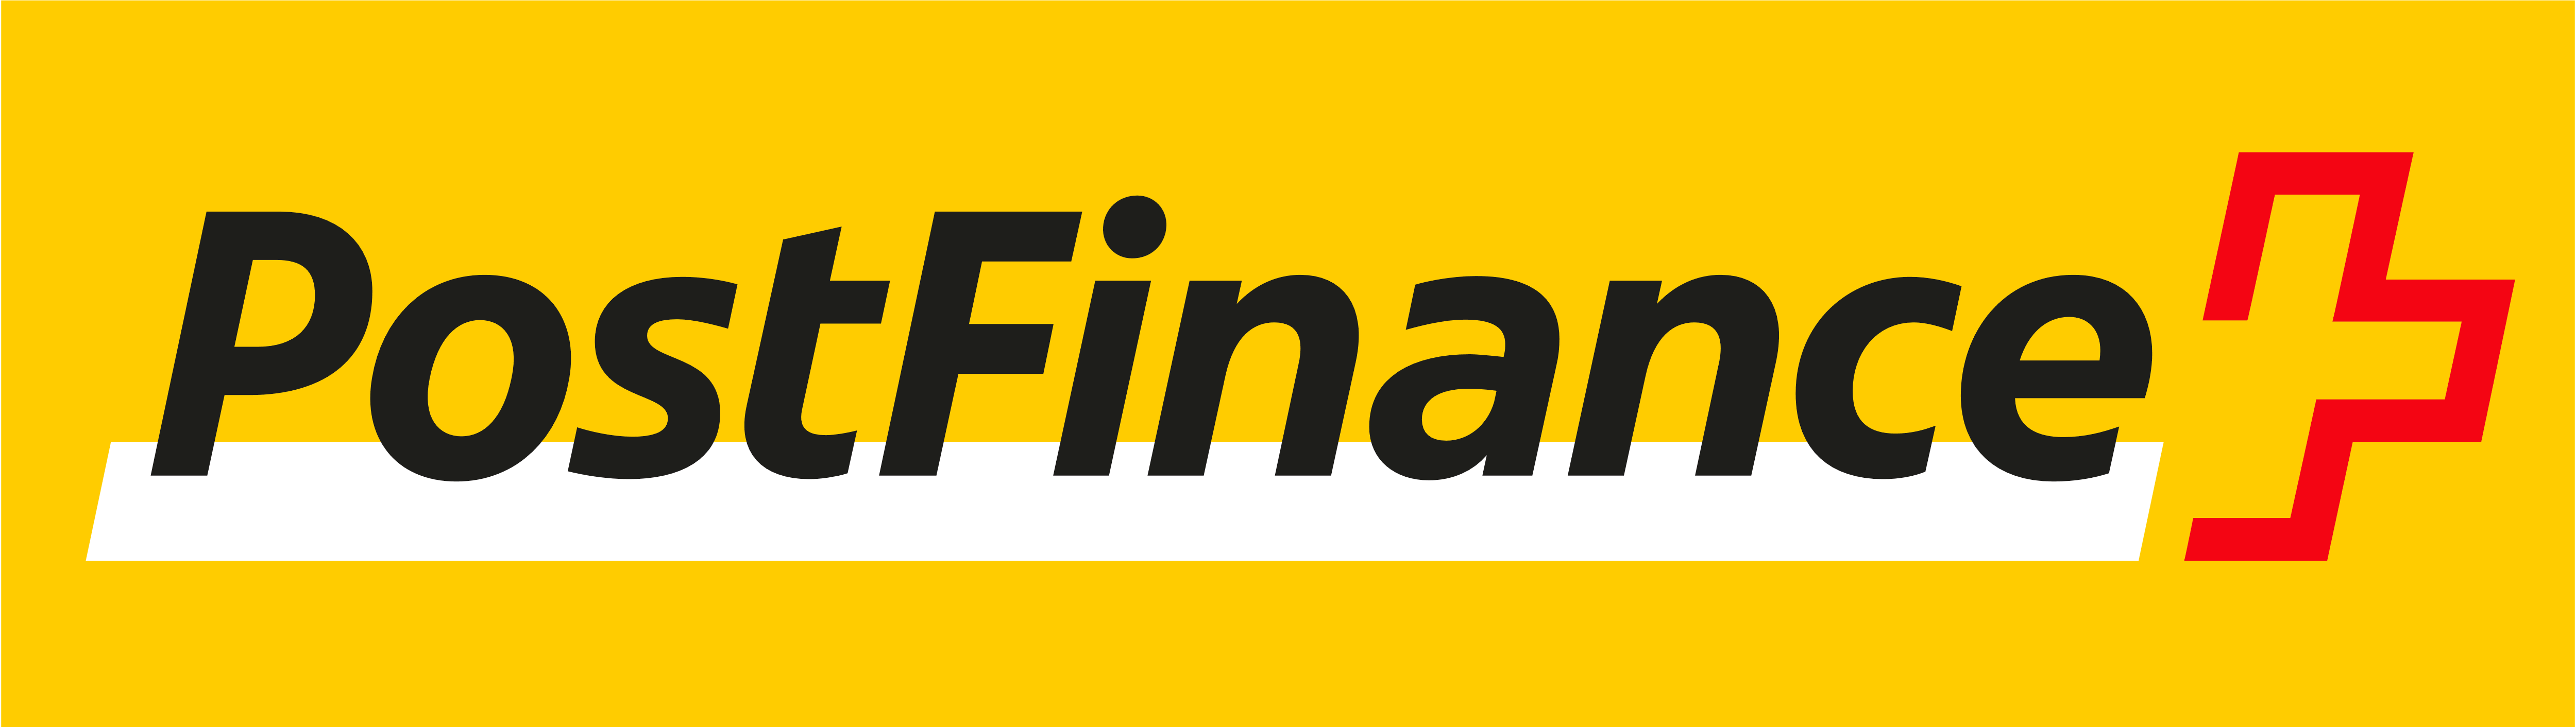 PostFinance – Logos Download